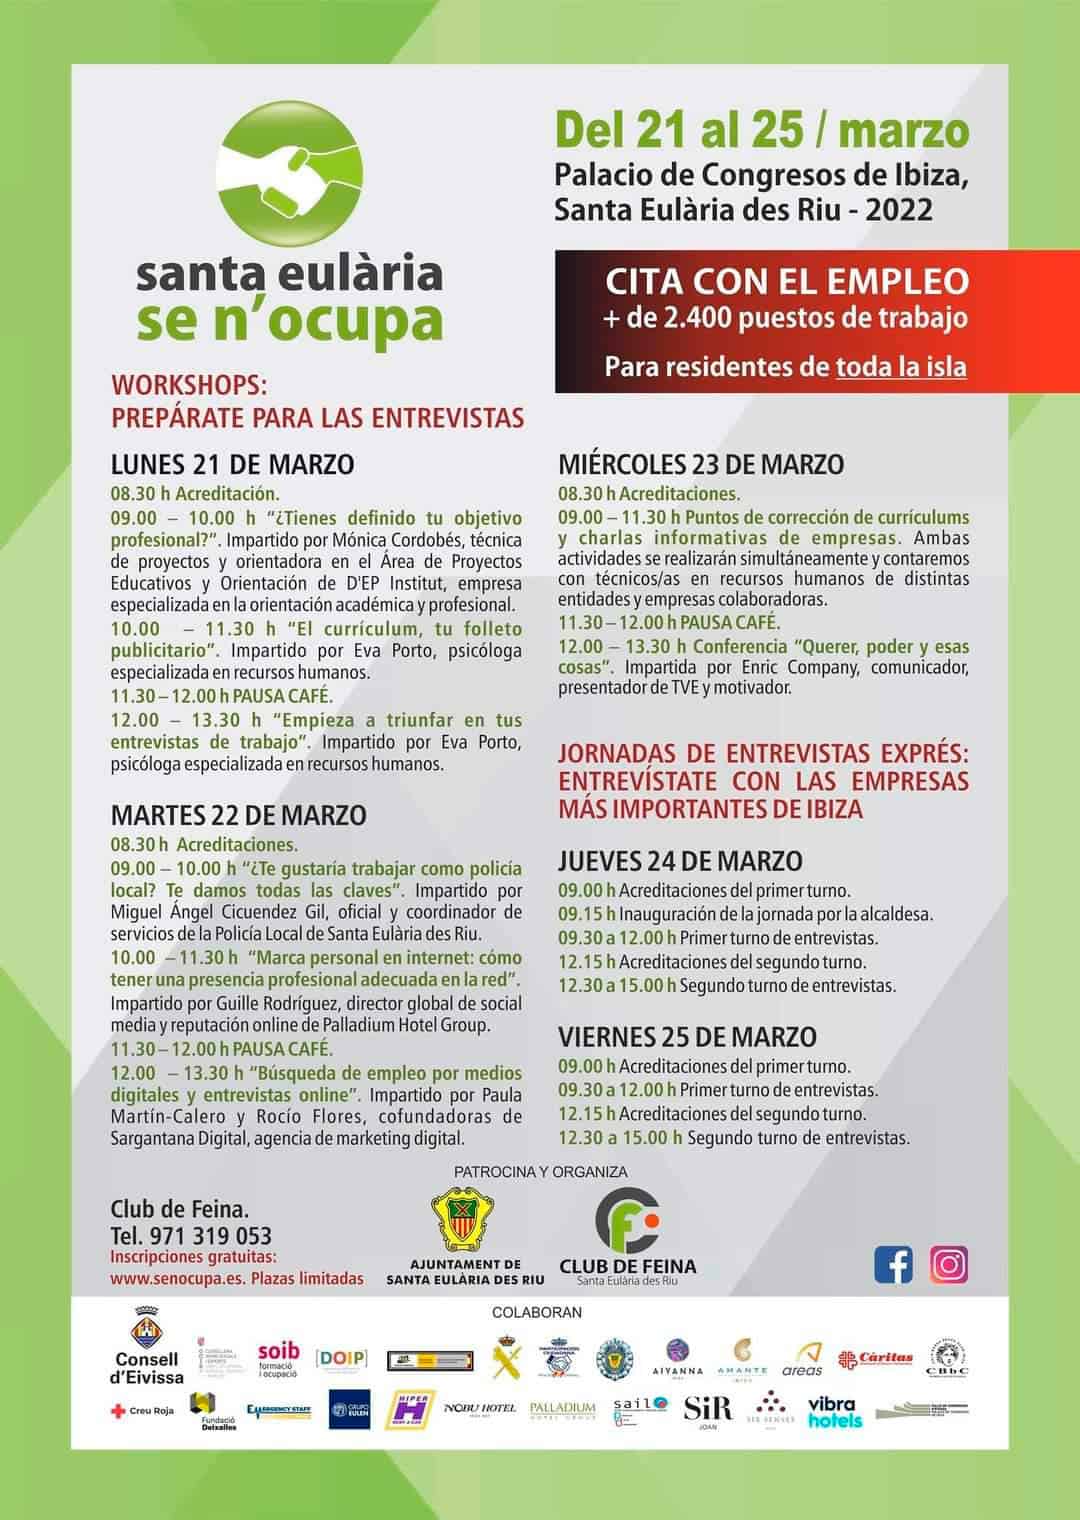 program-santa-eulalia-is-n-occupied-ibiza-2022-welcometoibiza